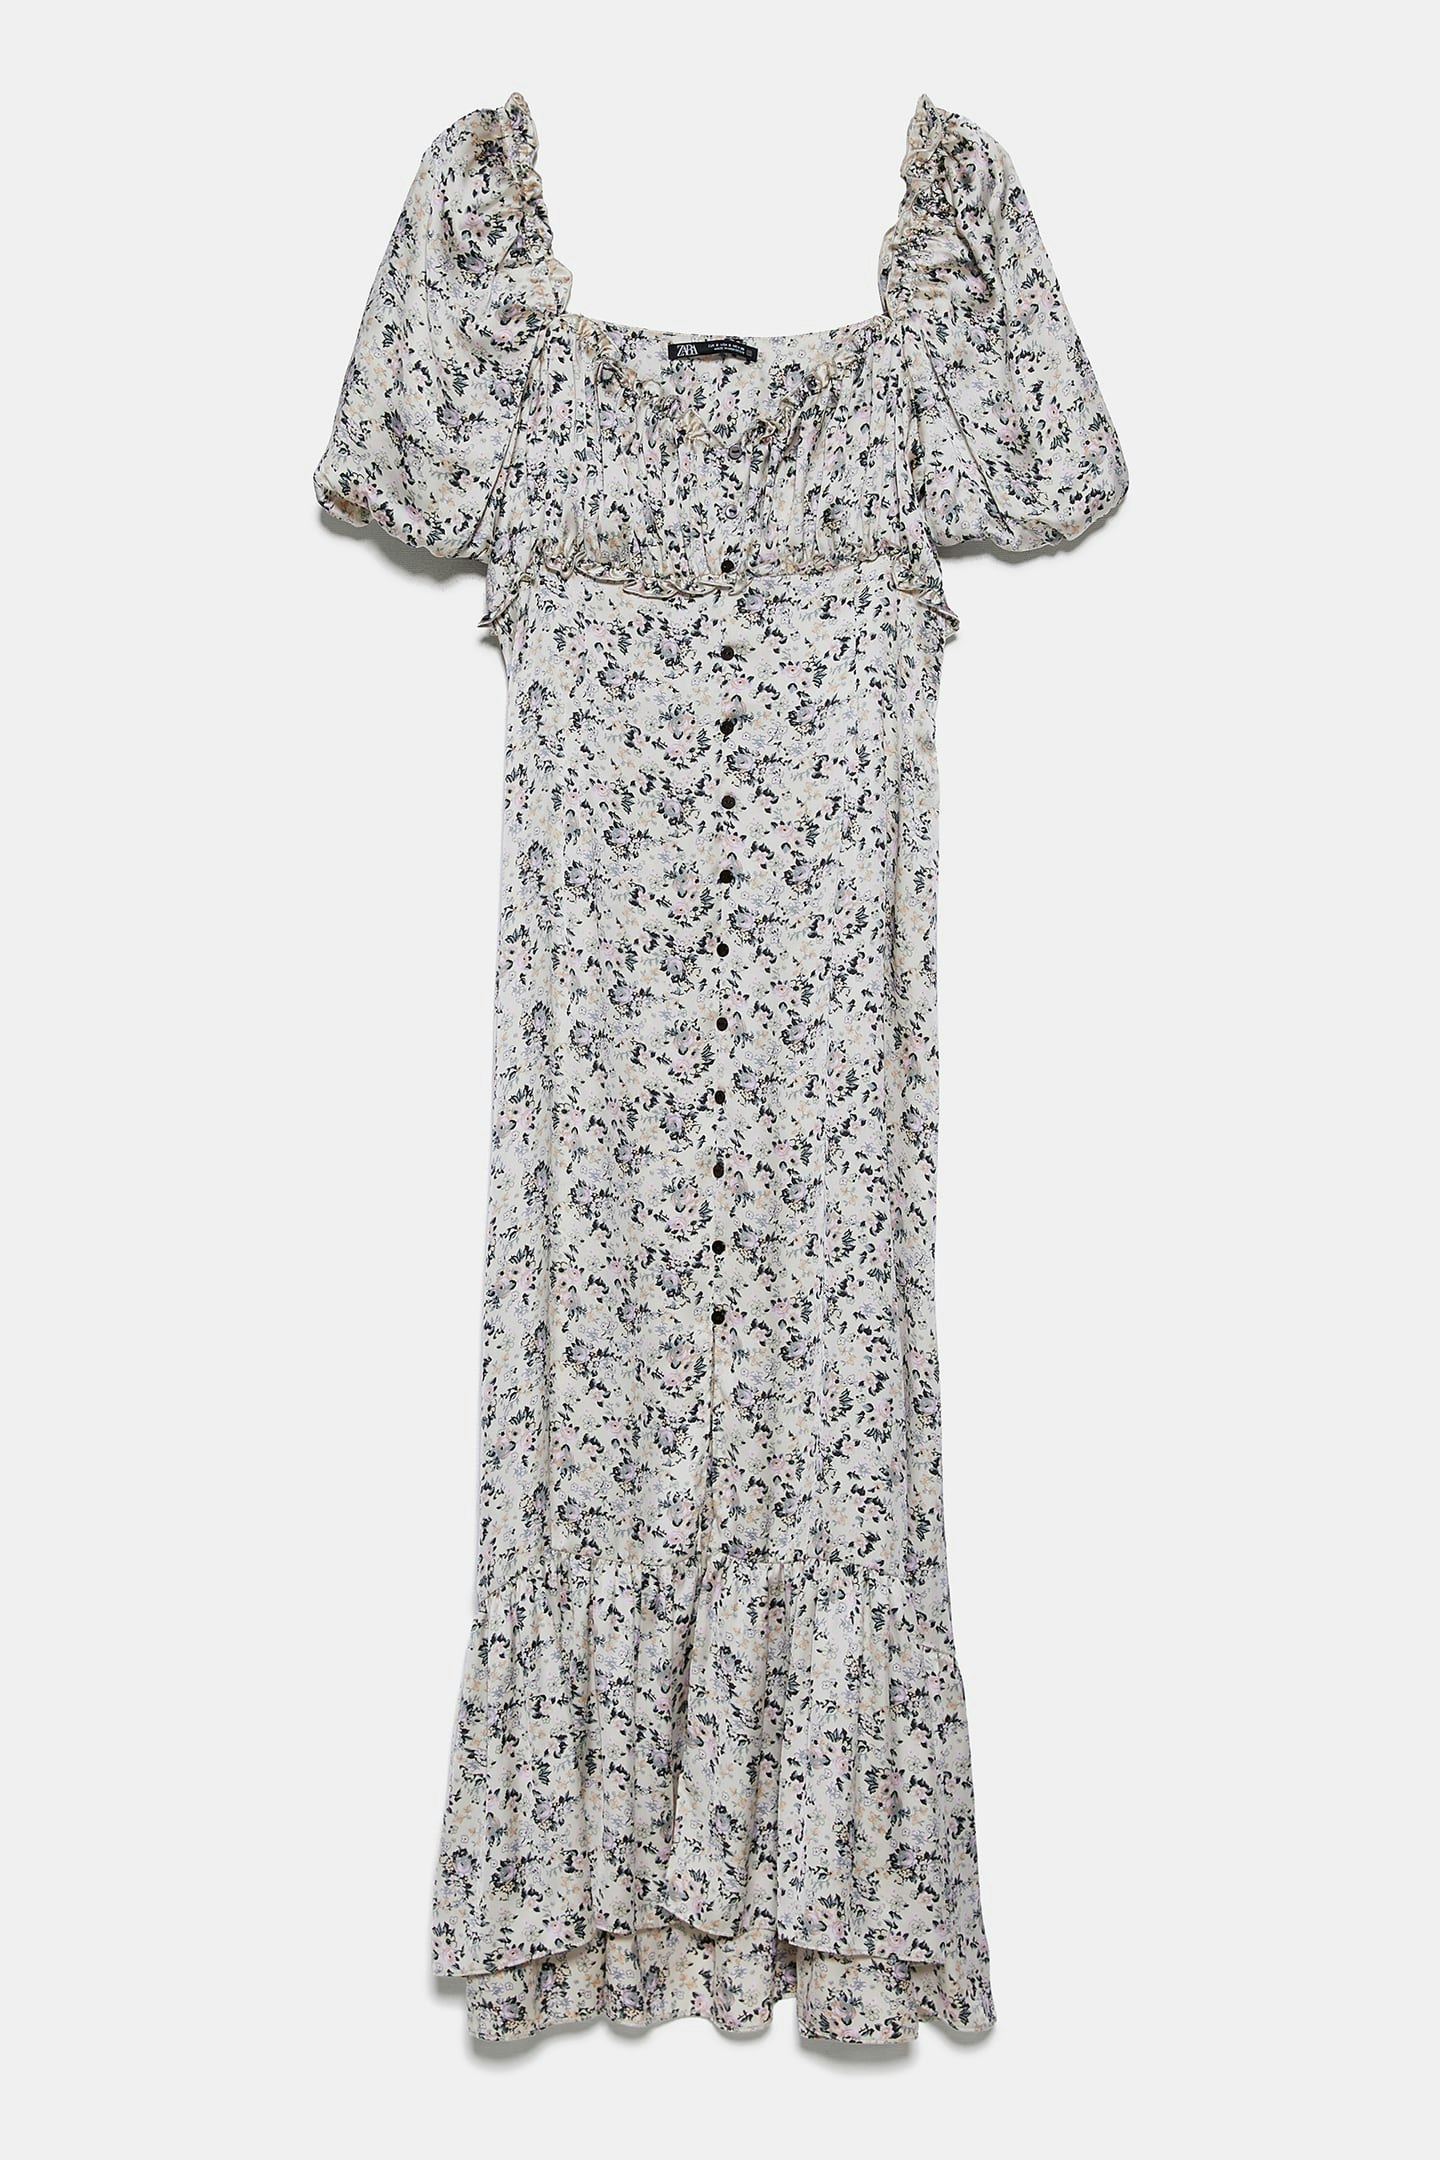 Zara, Printed Satin Dress, £49.99